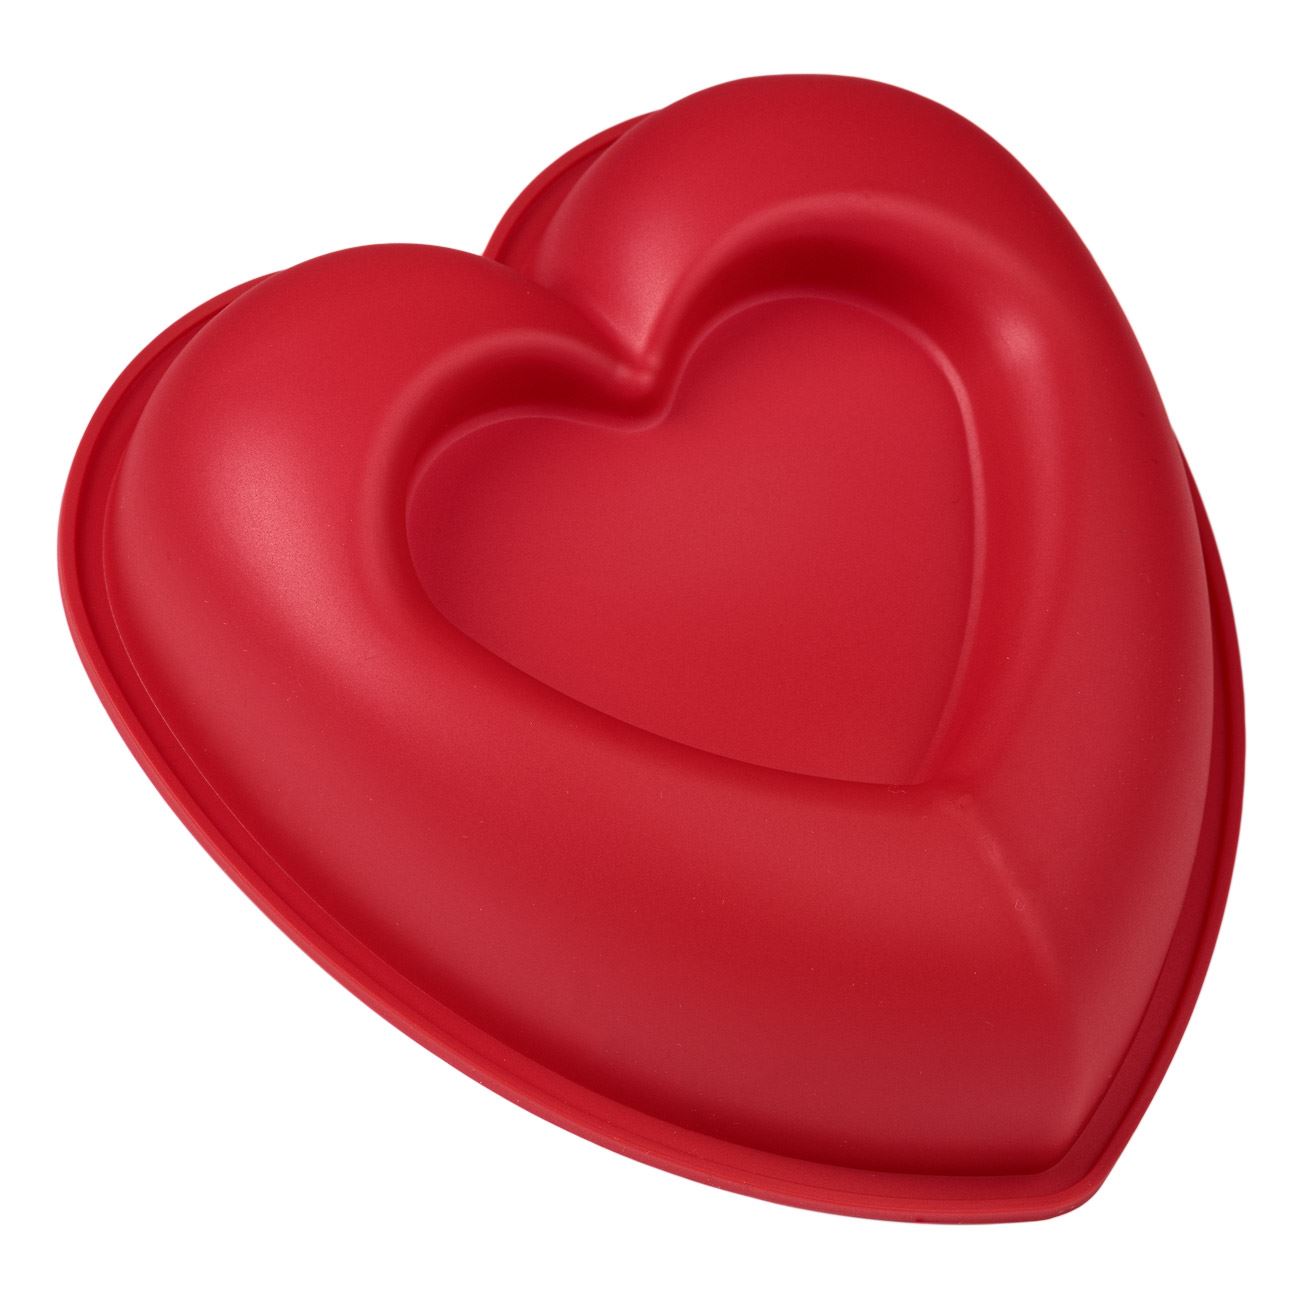 Szilikon cupcake forma piros szív alakú 15cm